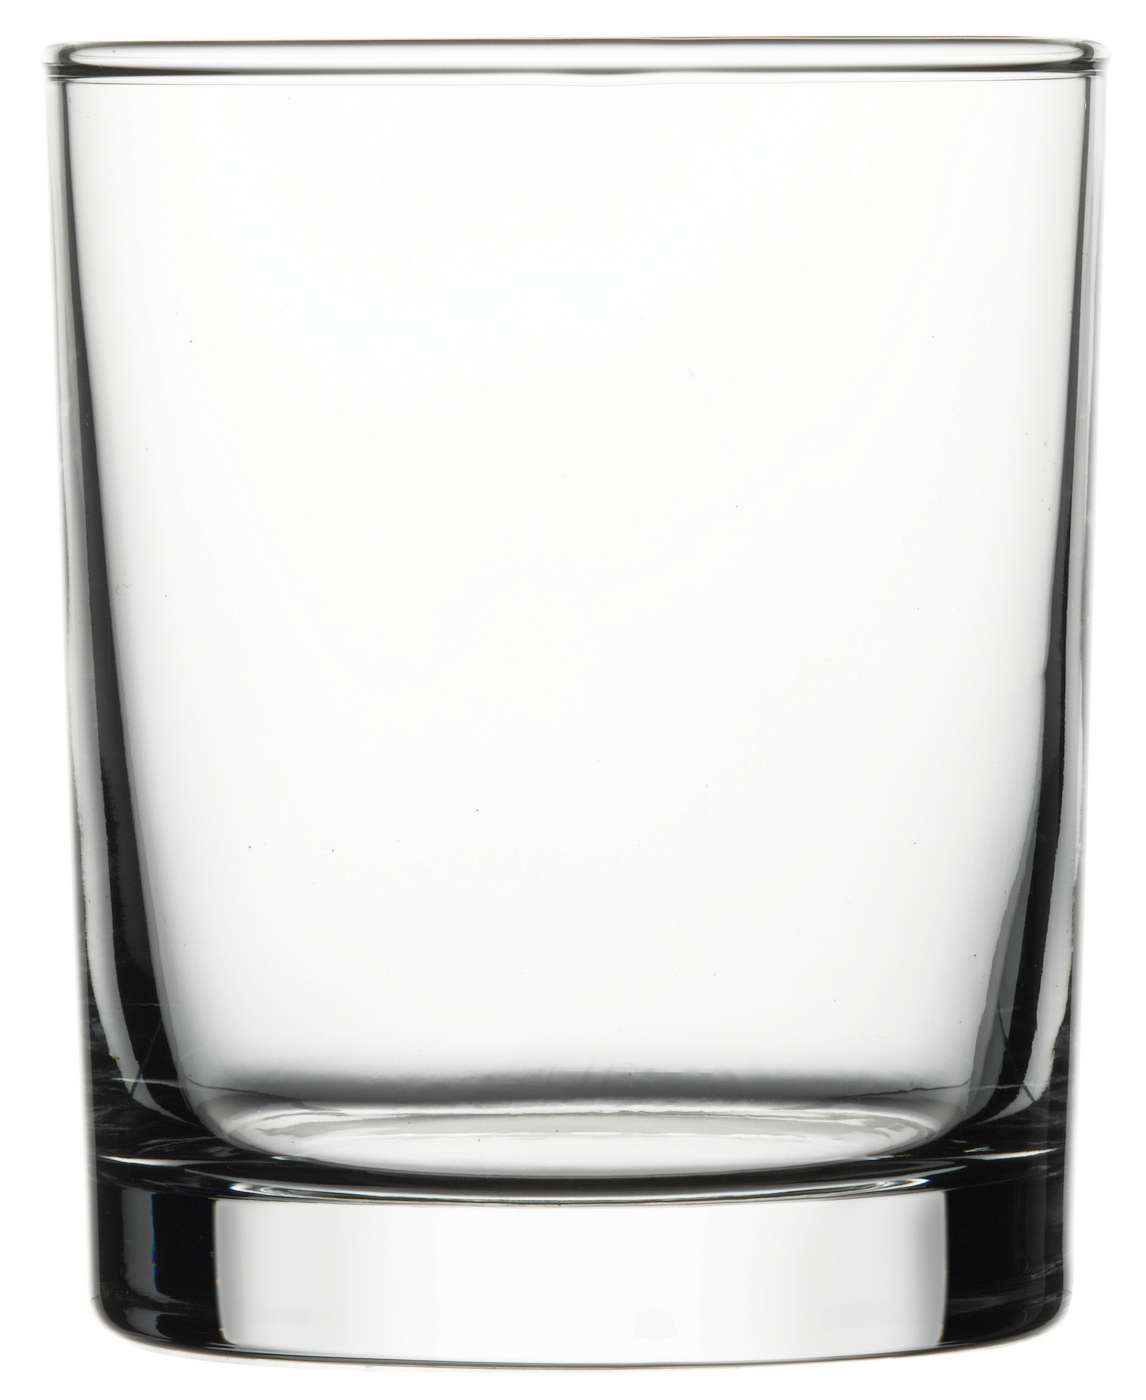 Whiskyglas Pasabahce Istanbul, 0,245 ltr., Ø 6,8 cm, Set á 12 Stück, Glas